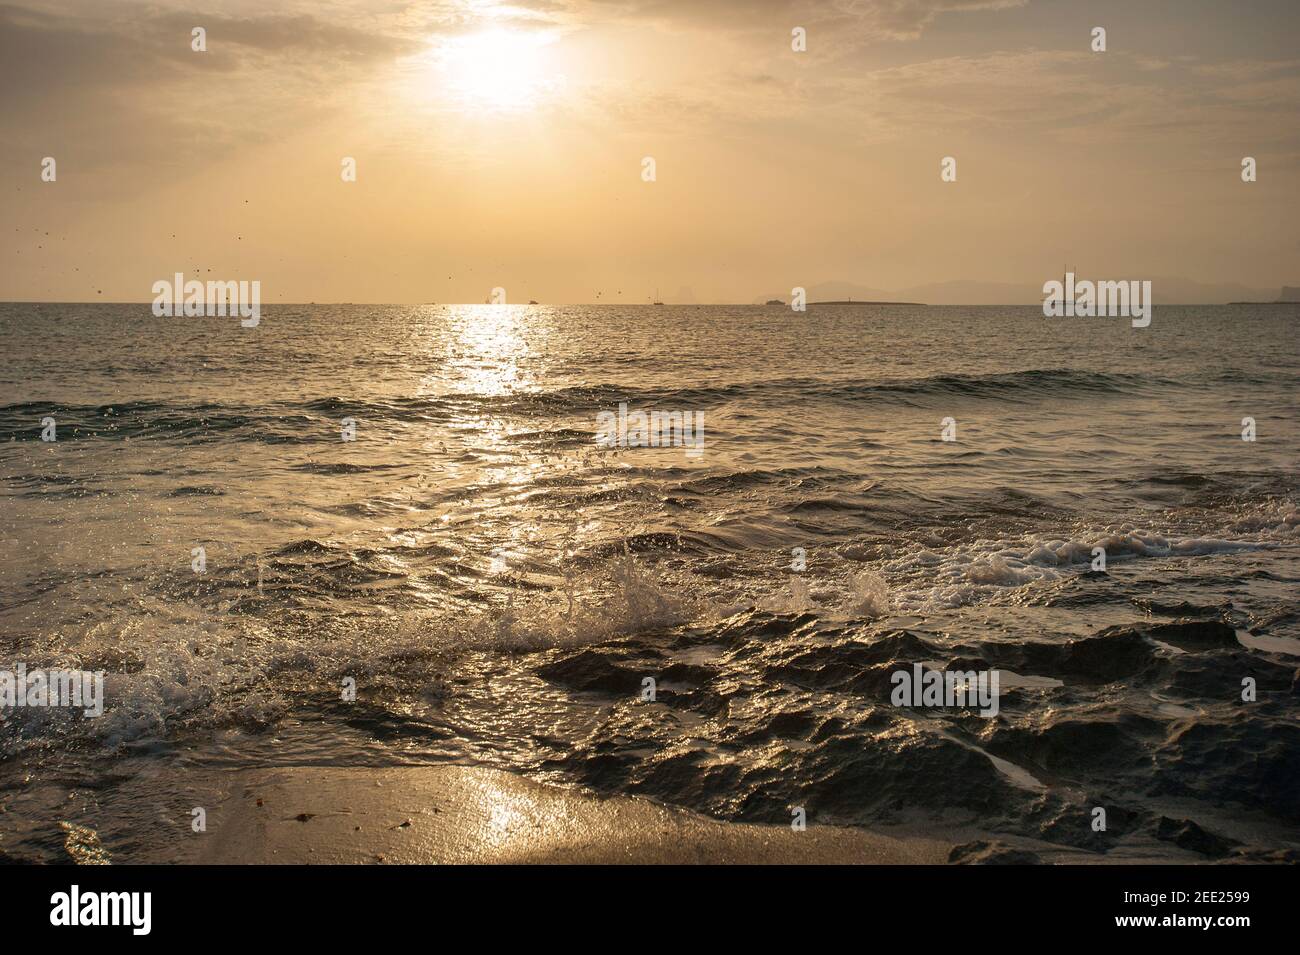 Playa de ses illetes at sunset, Formentera, Balearics, Spain Stock Photo